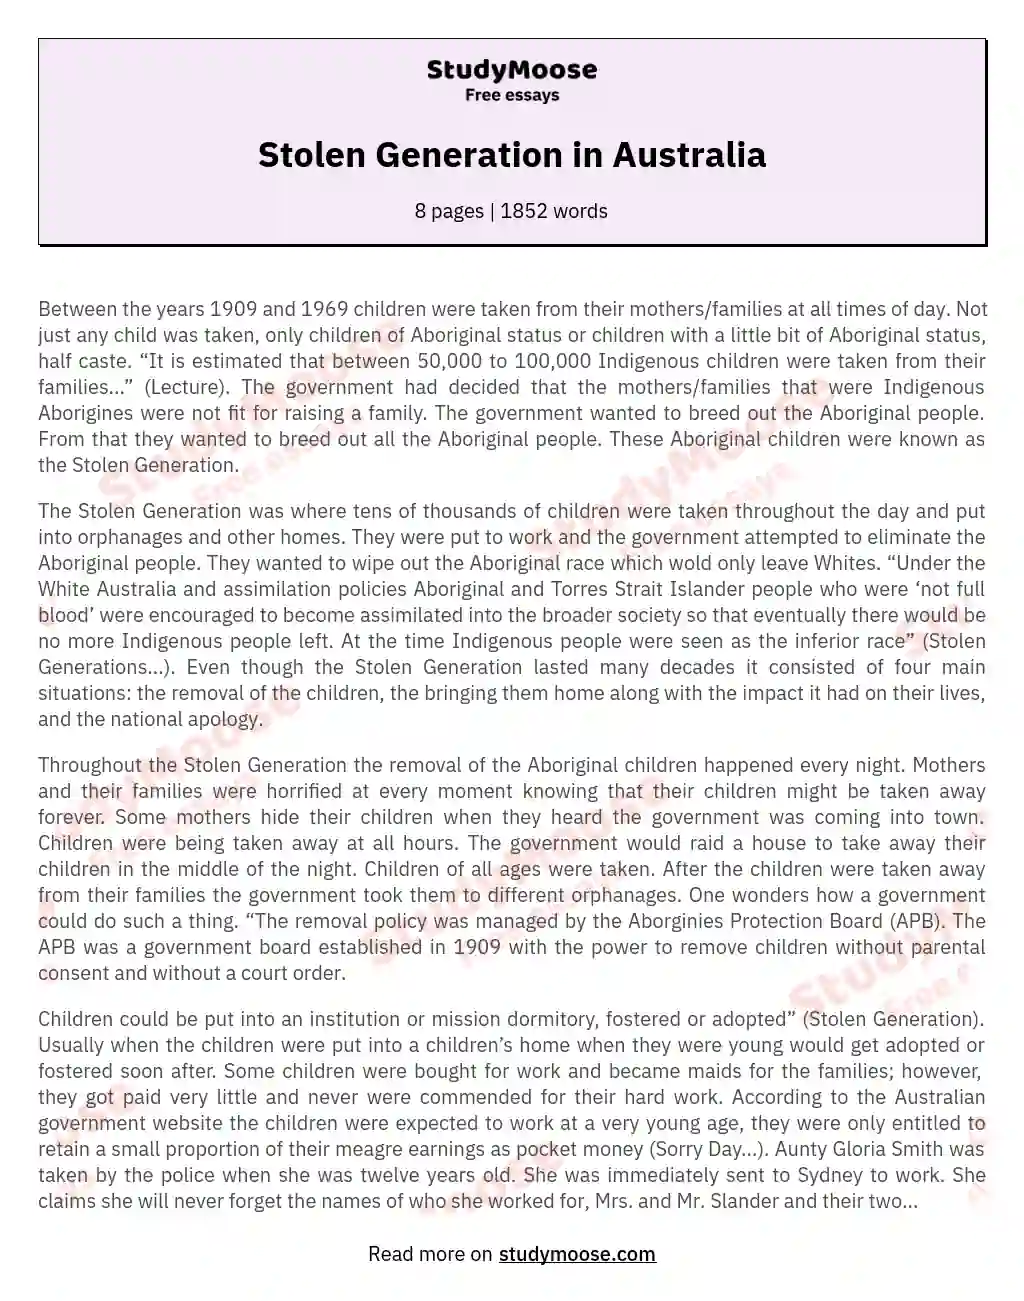 Stolen Generation in Australia essay